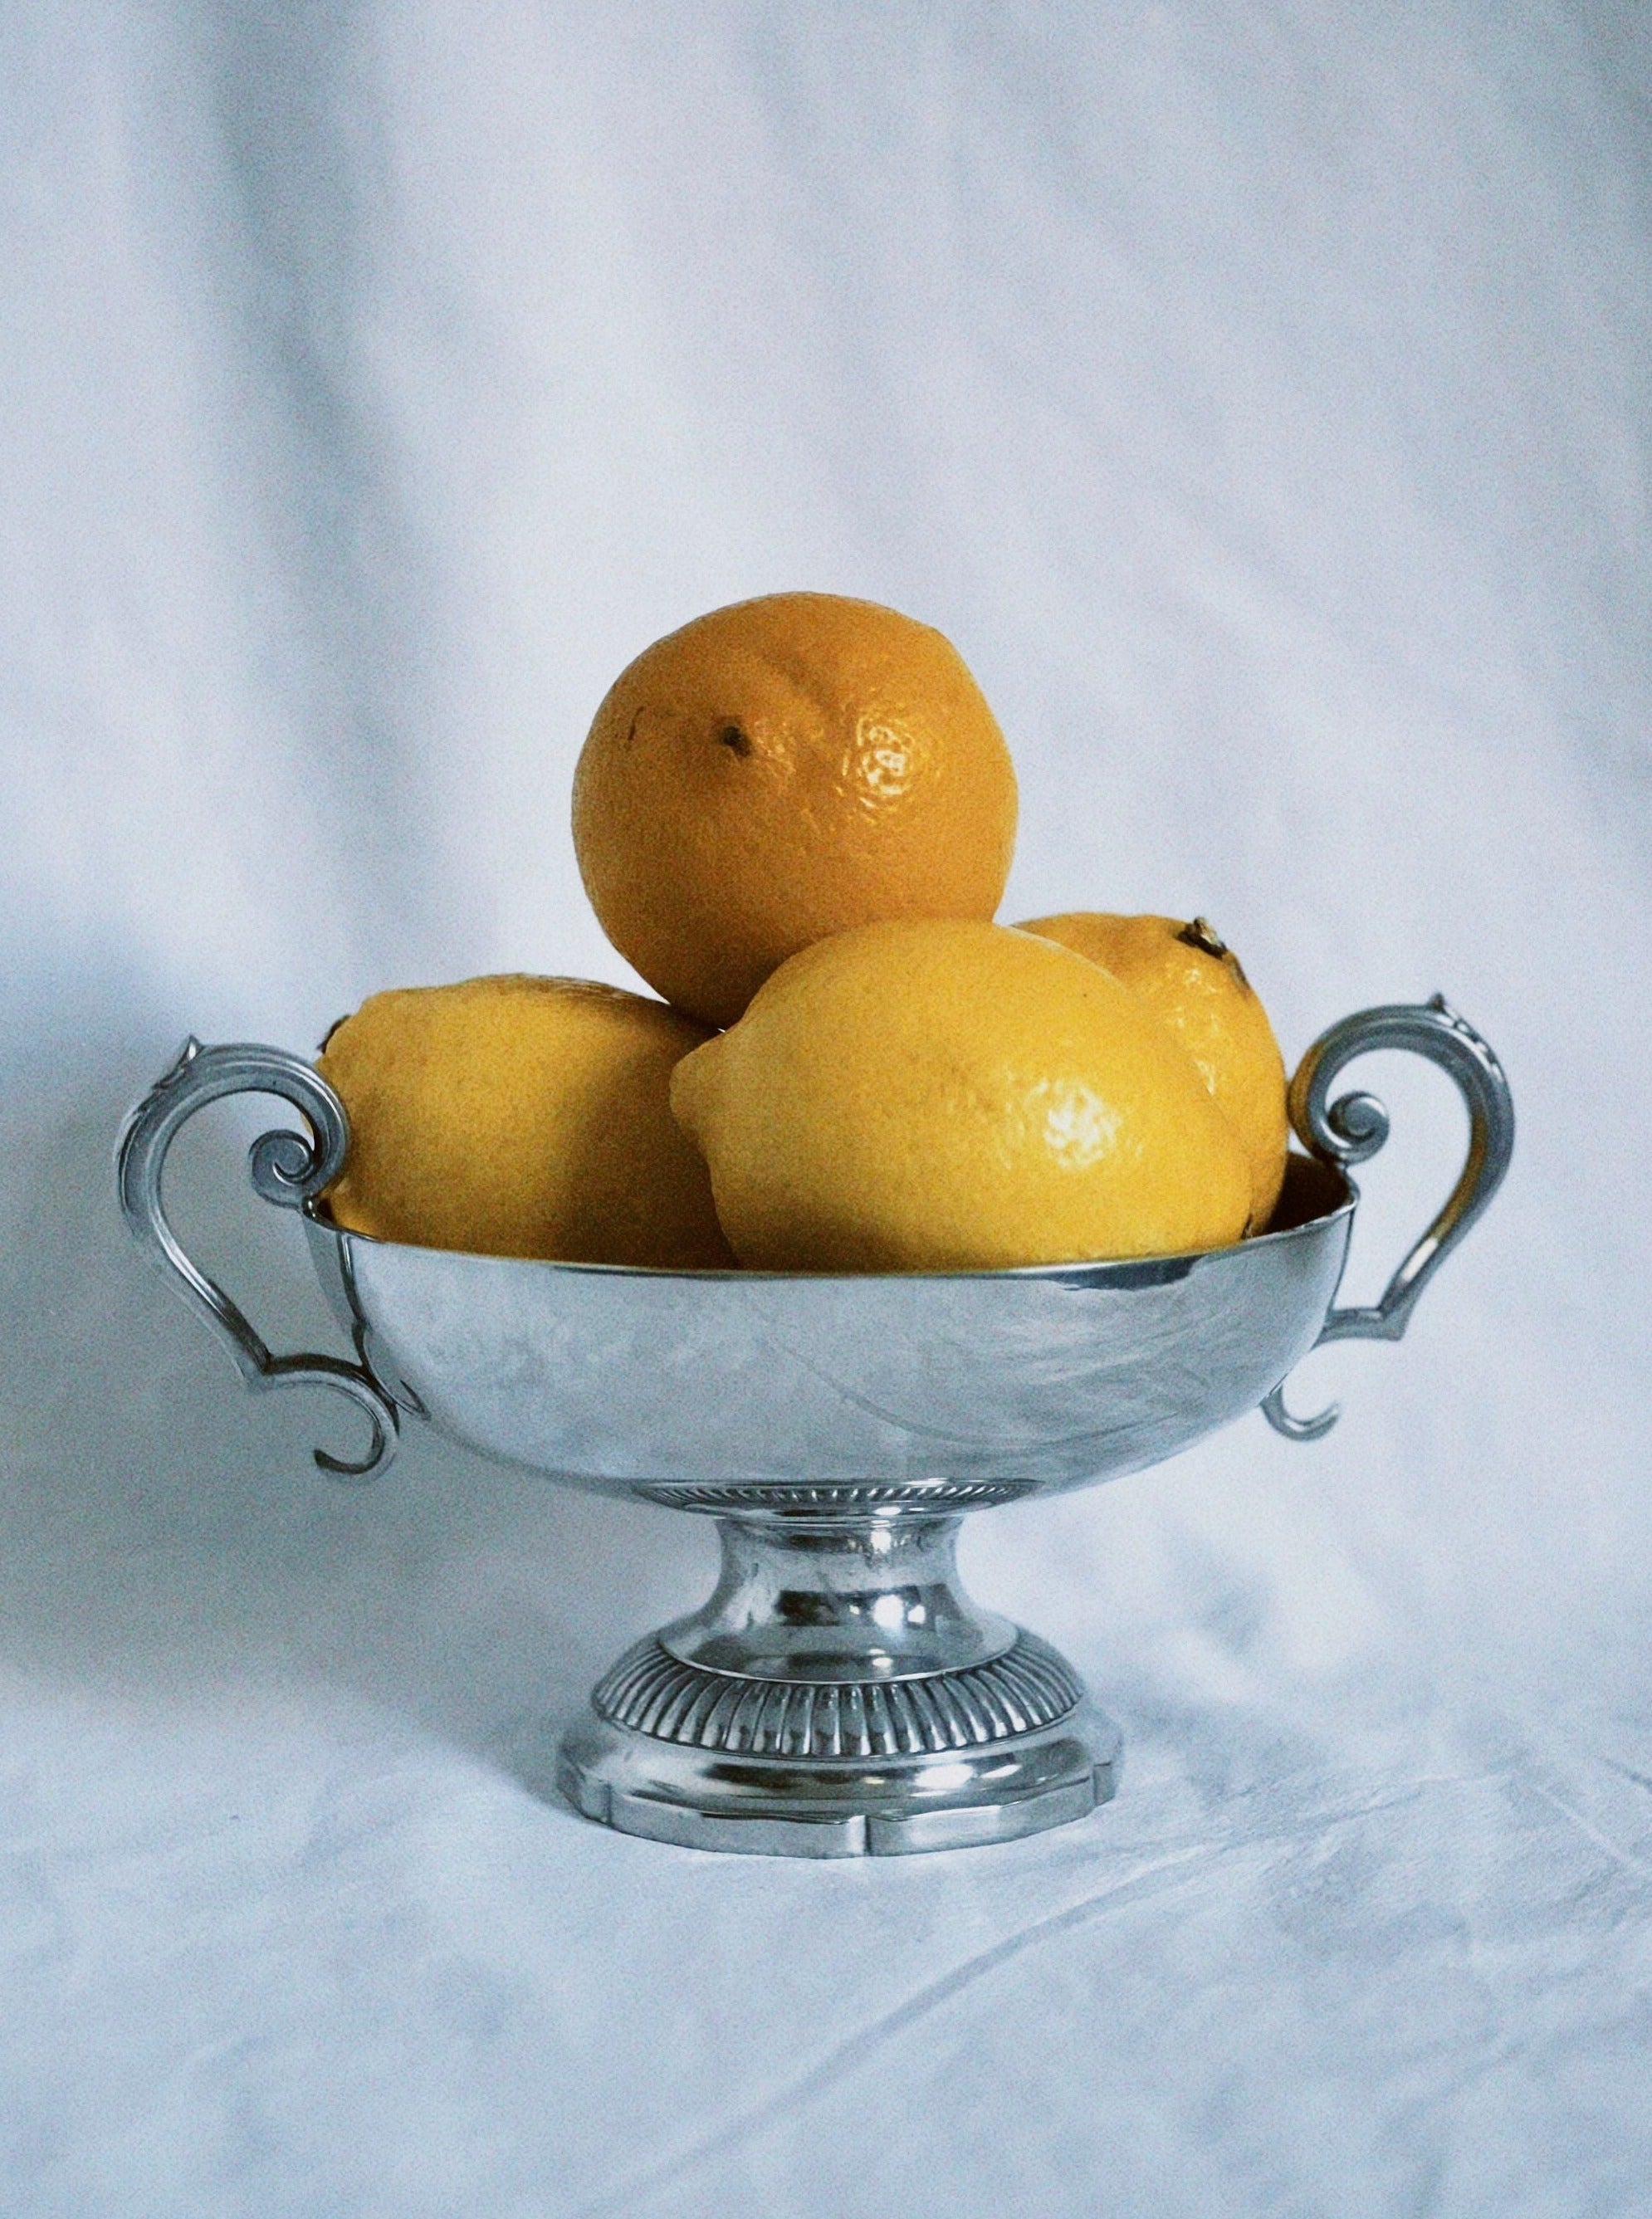 Silver Fruit Bowl